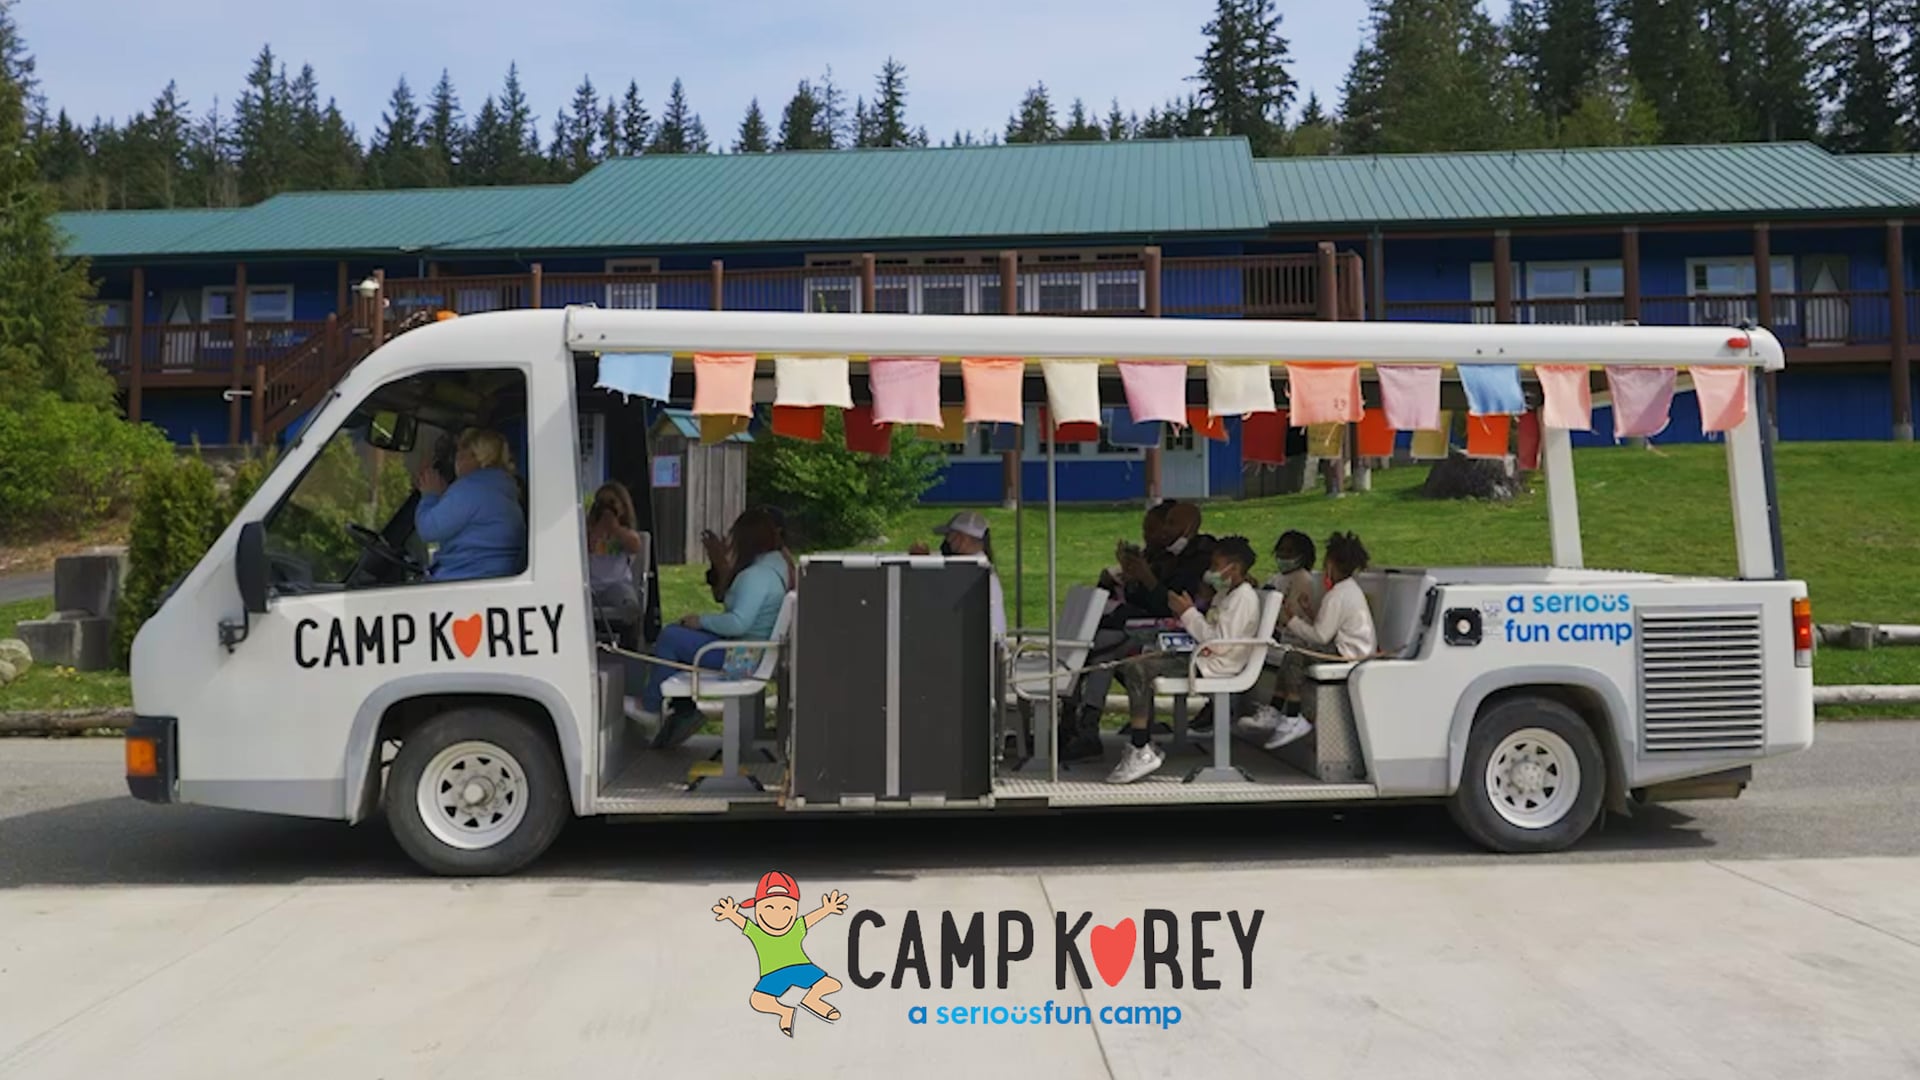 Camp Korey - Capital Campaign